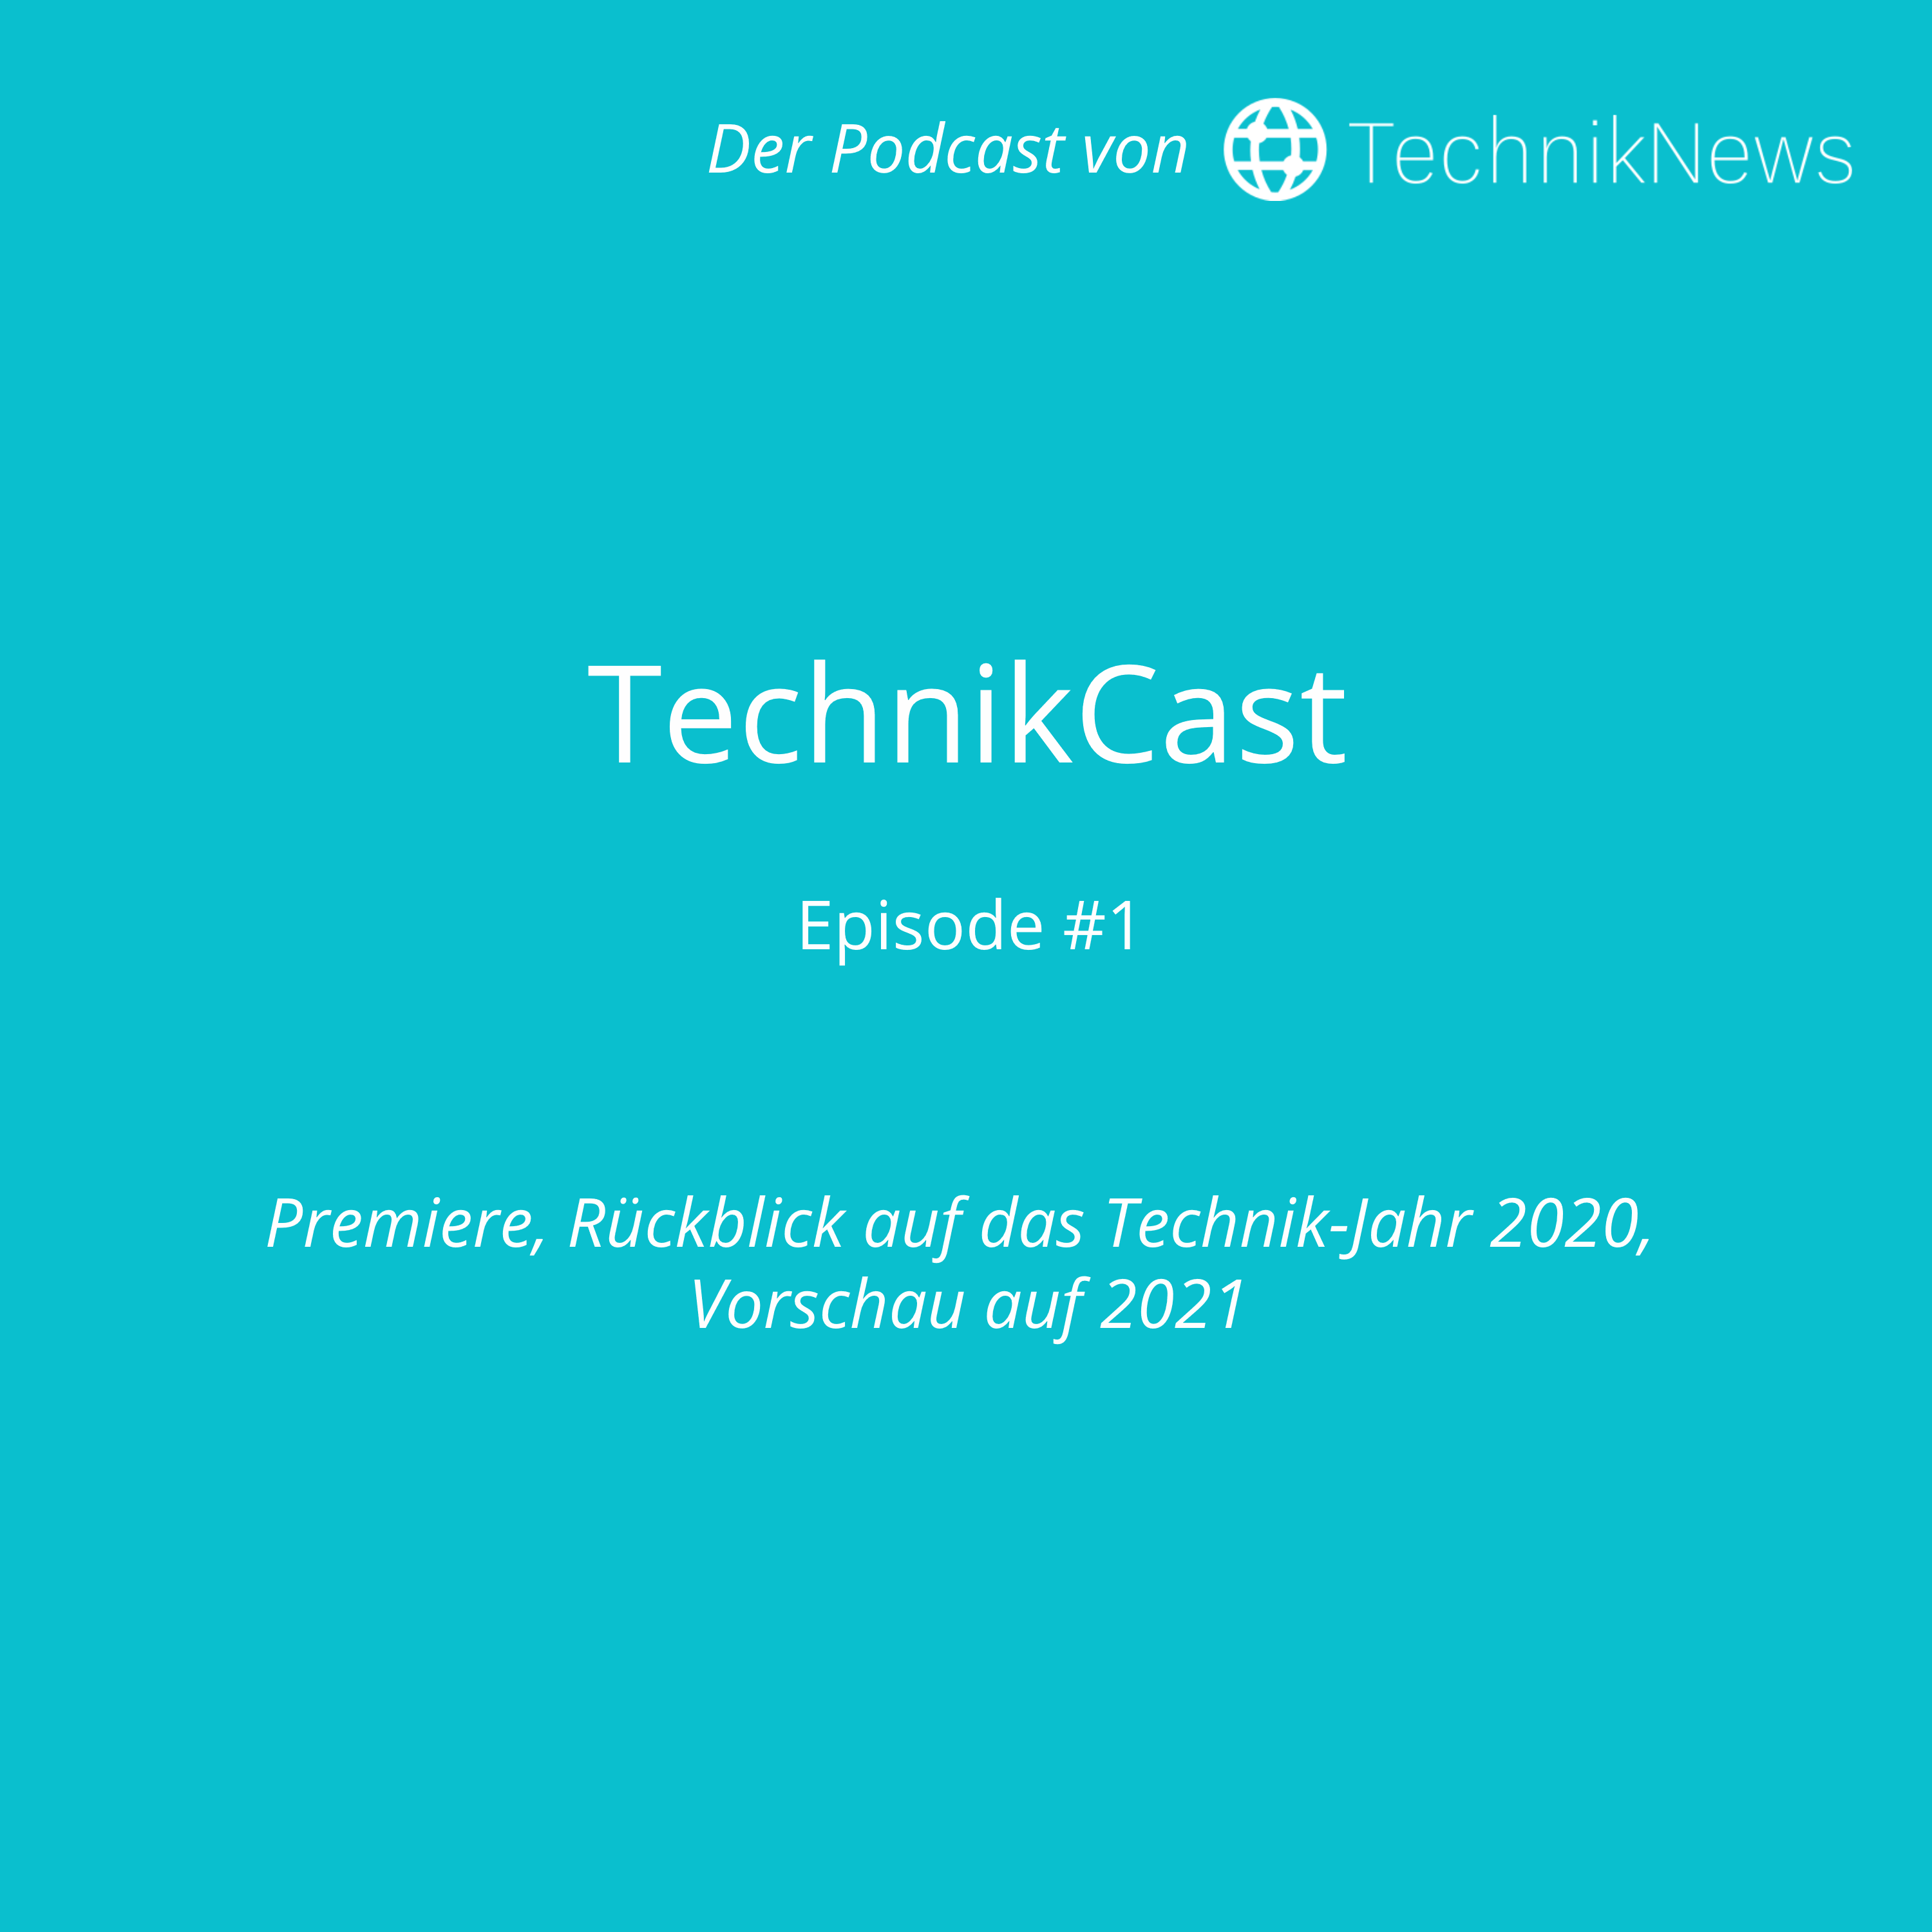 TechnikCast Episode #1